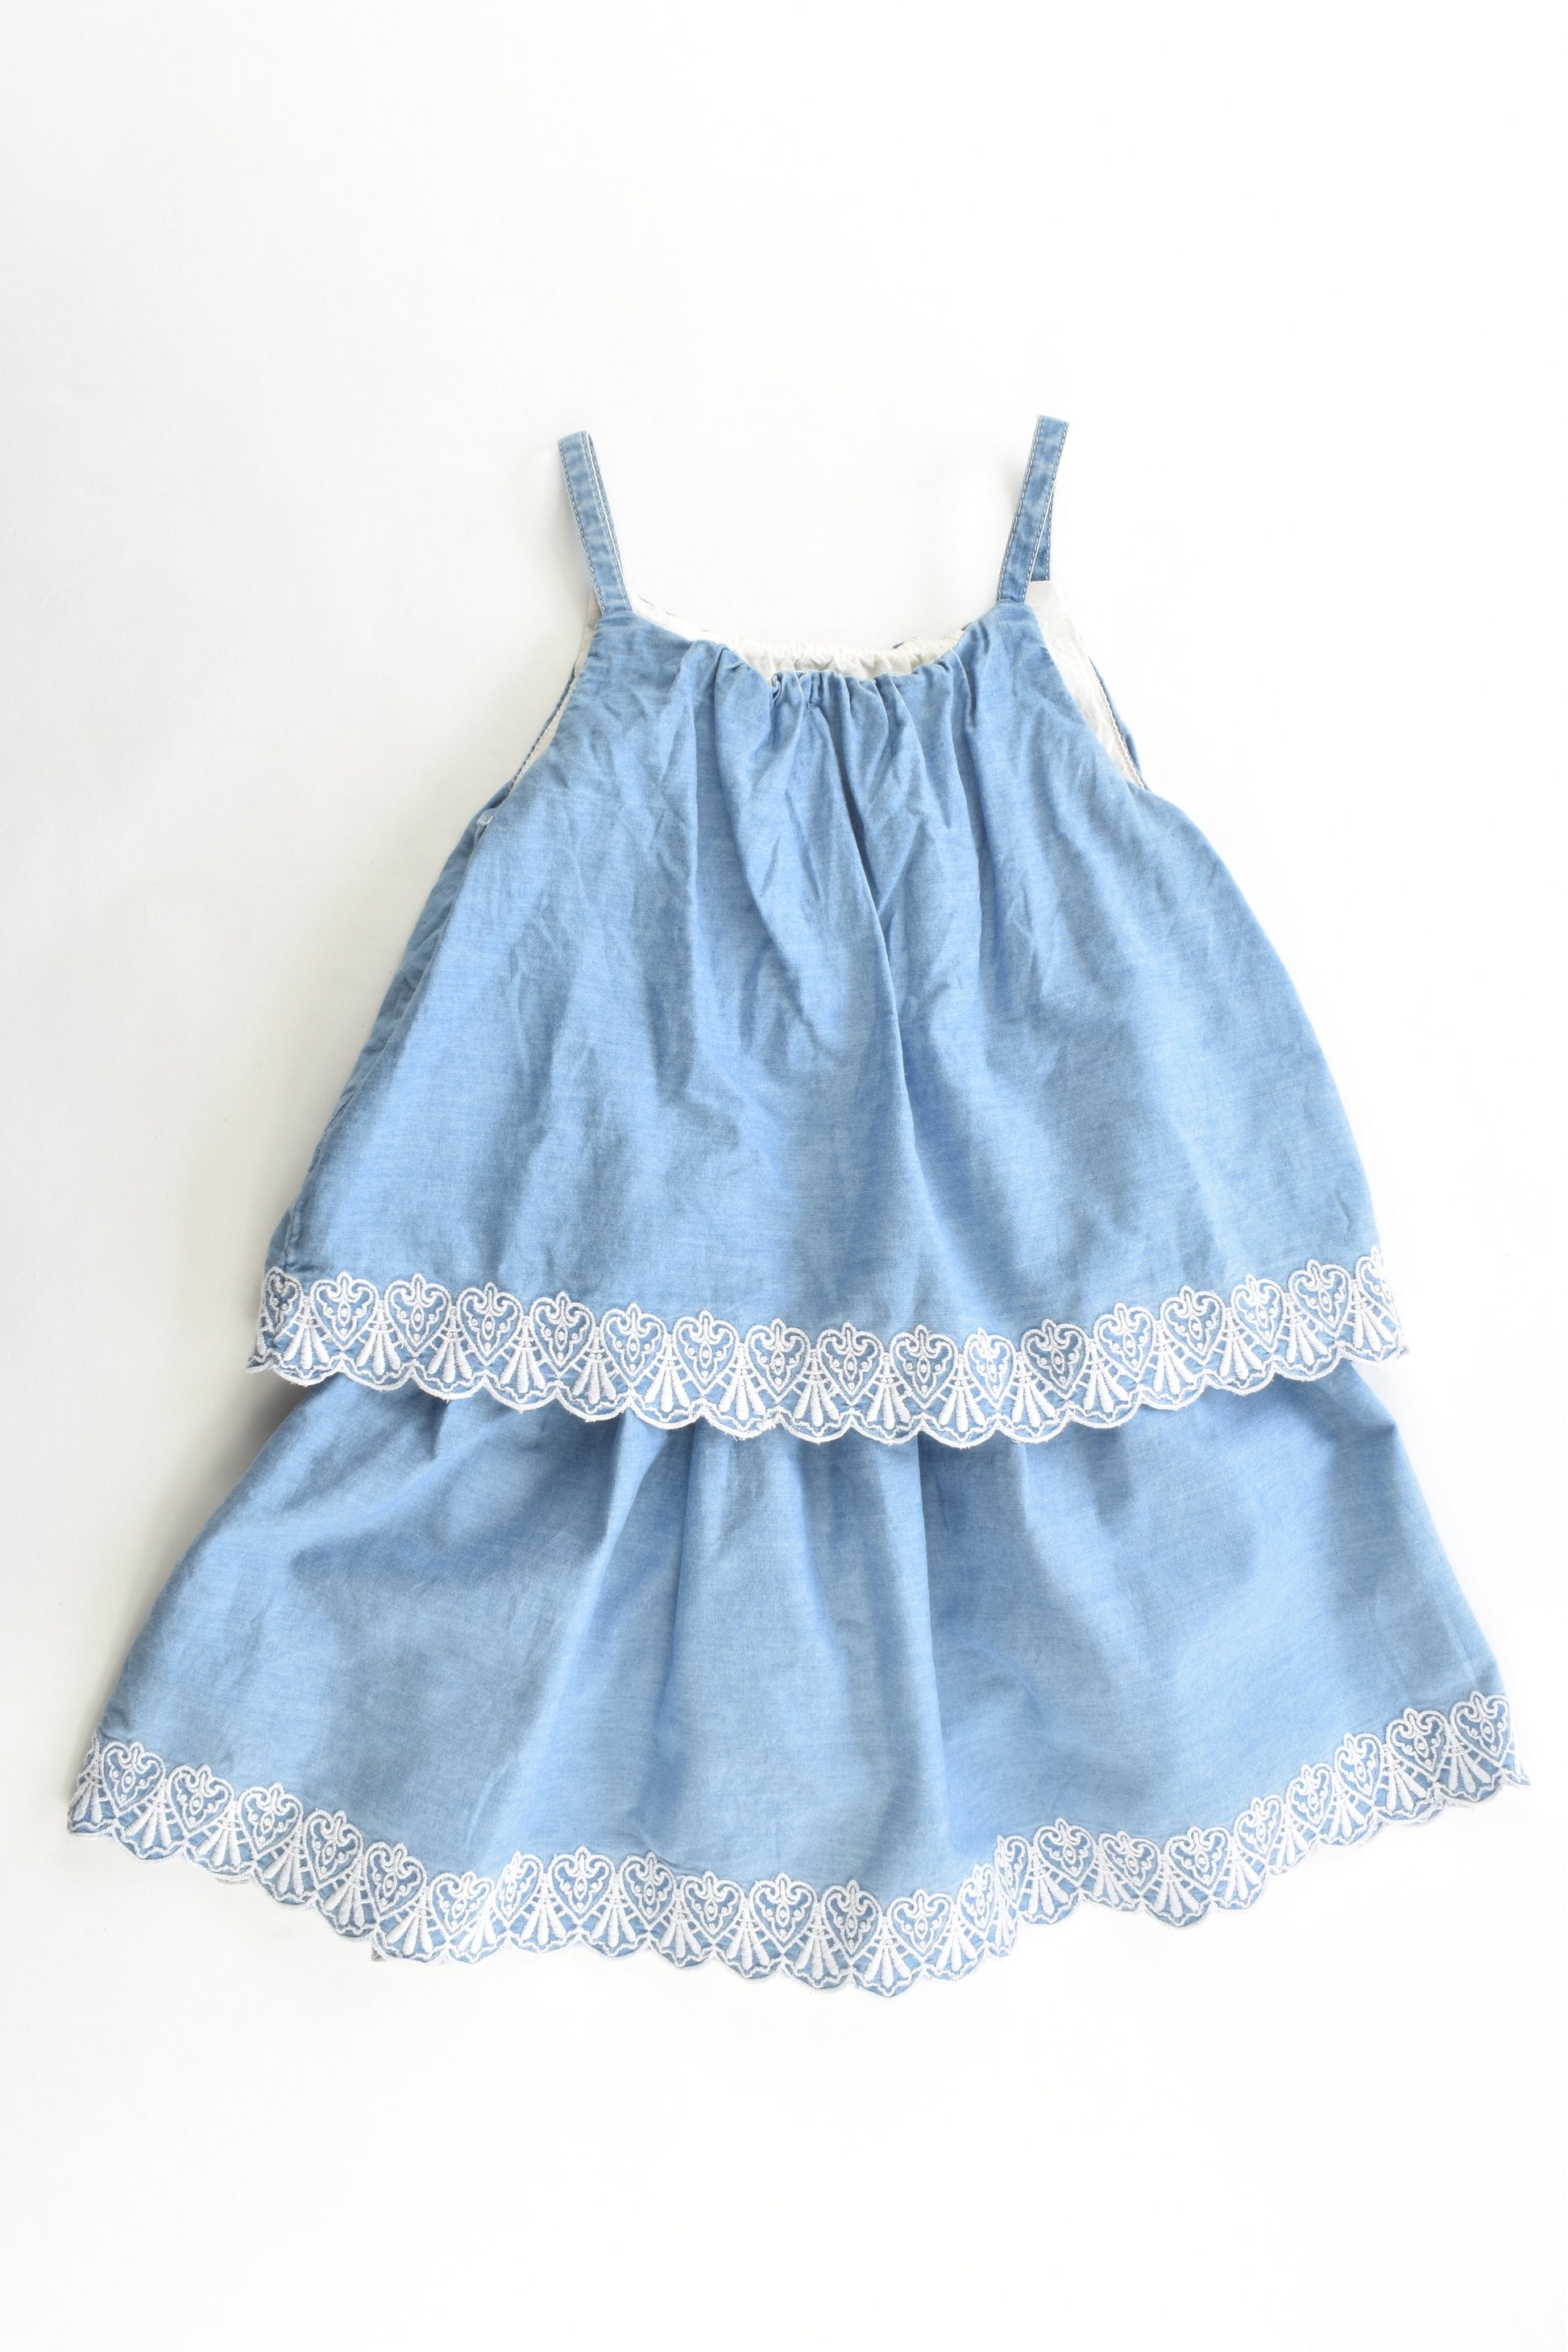 F&F (UK) Size 4-5 Soft Denim Dress with Lace Details